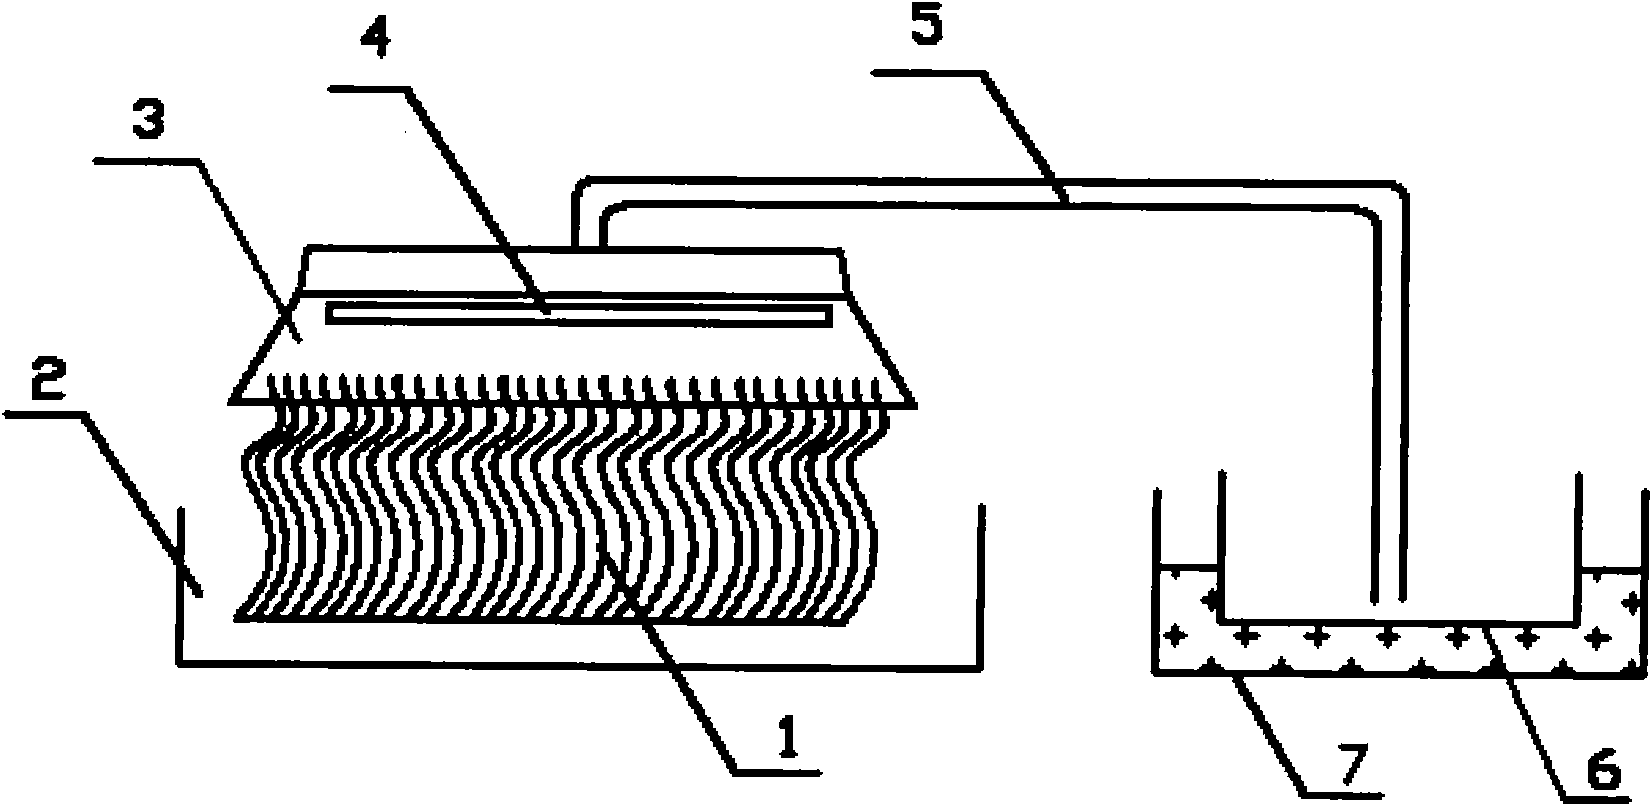 Distillation type sewage treatment device